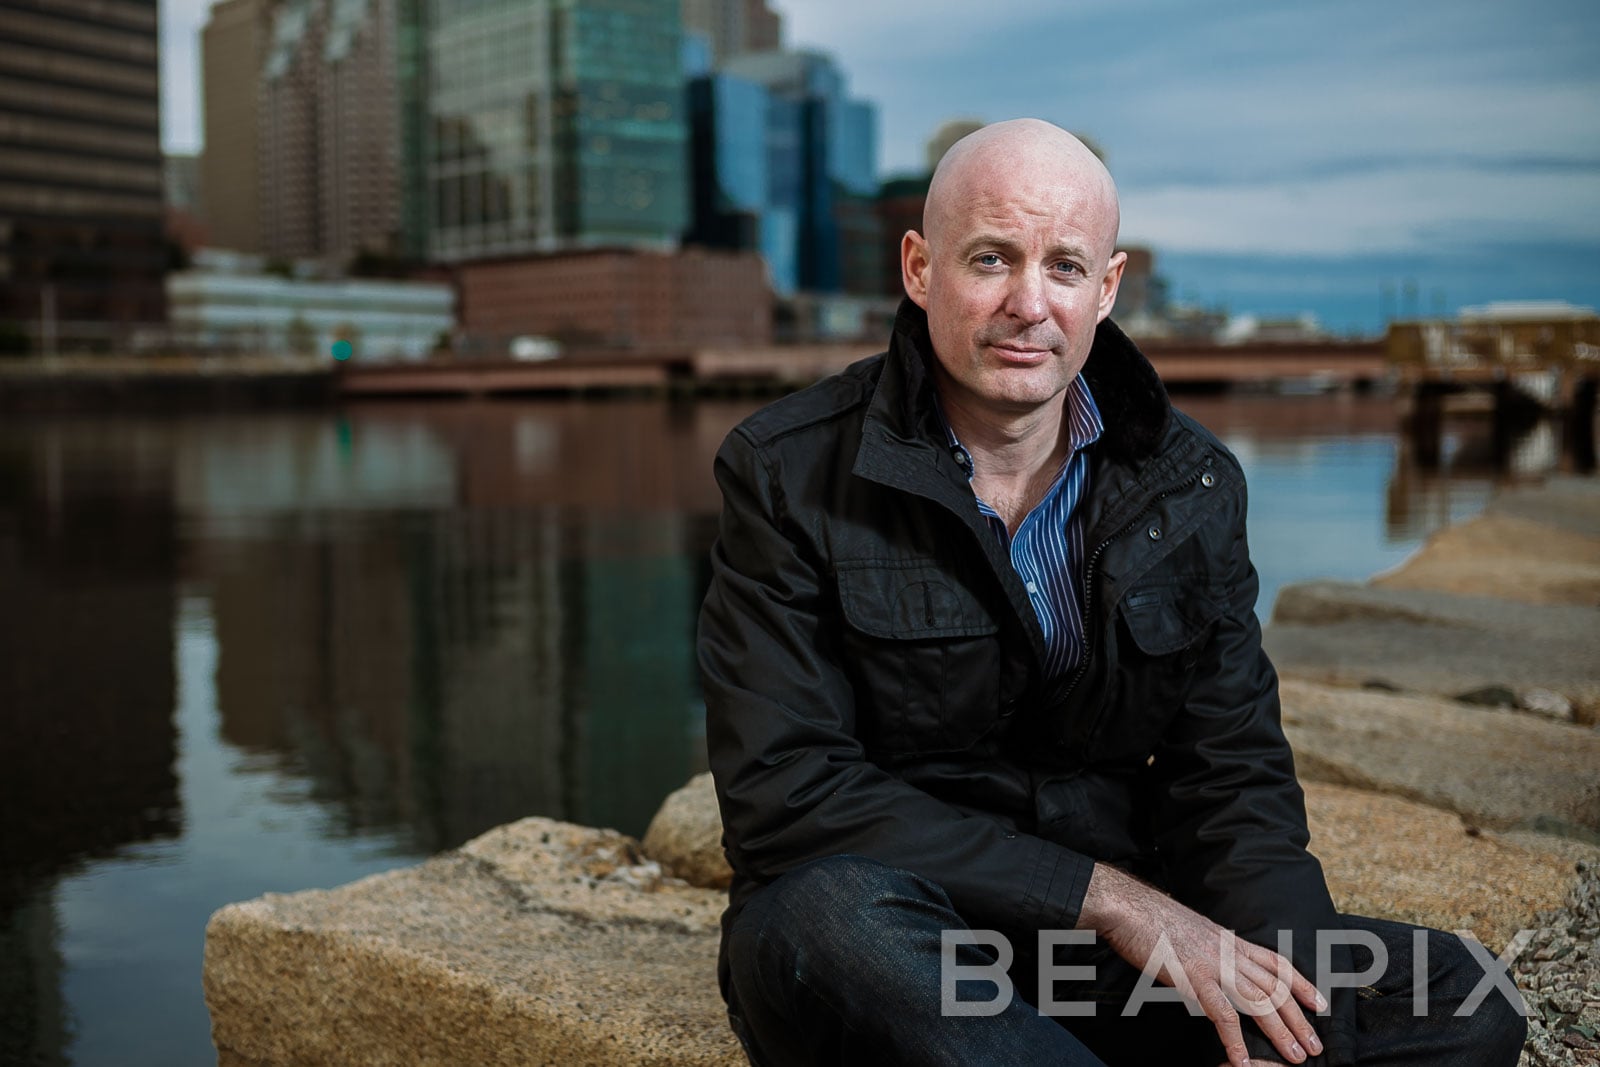 Boston Headshot Photographer | Corporate Photographer, Executive portraits, Editorial, Fashion